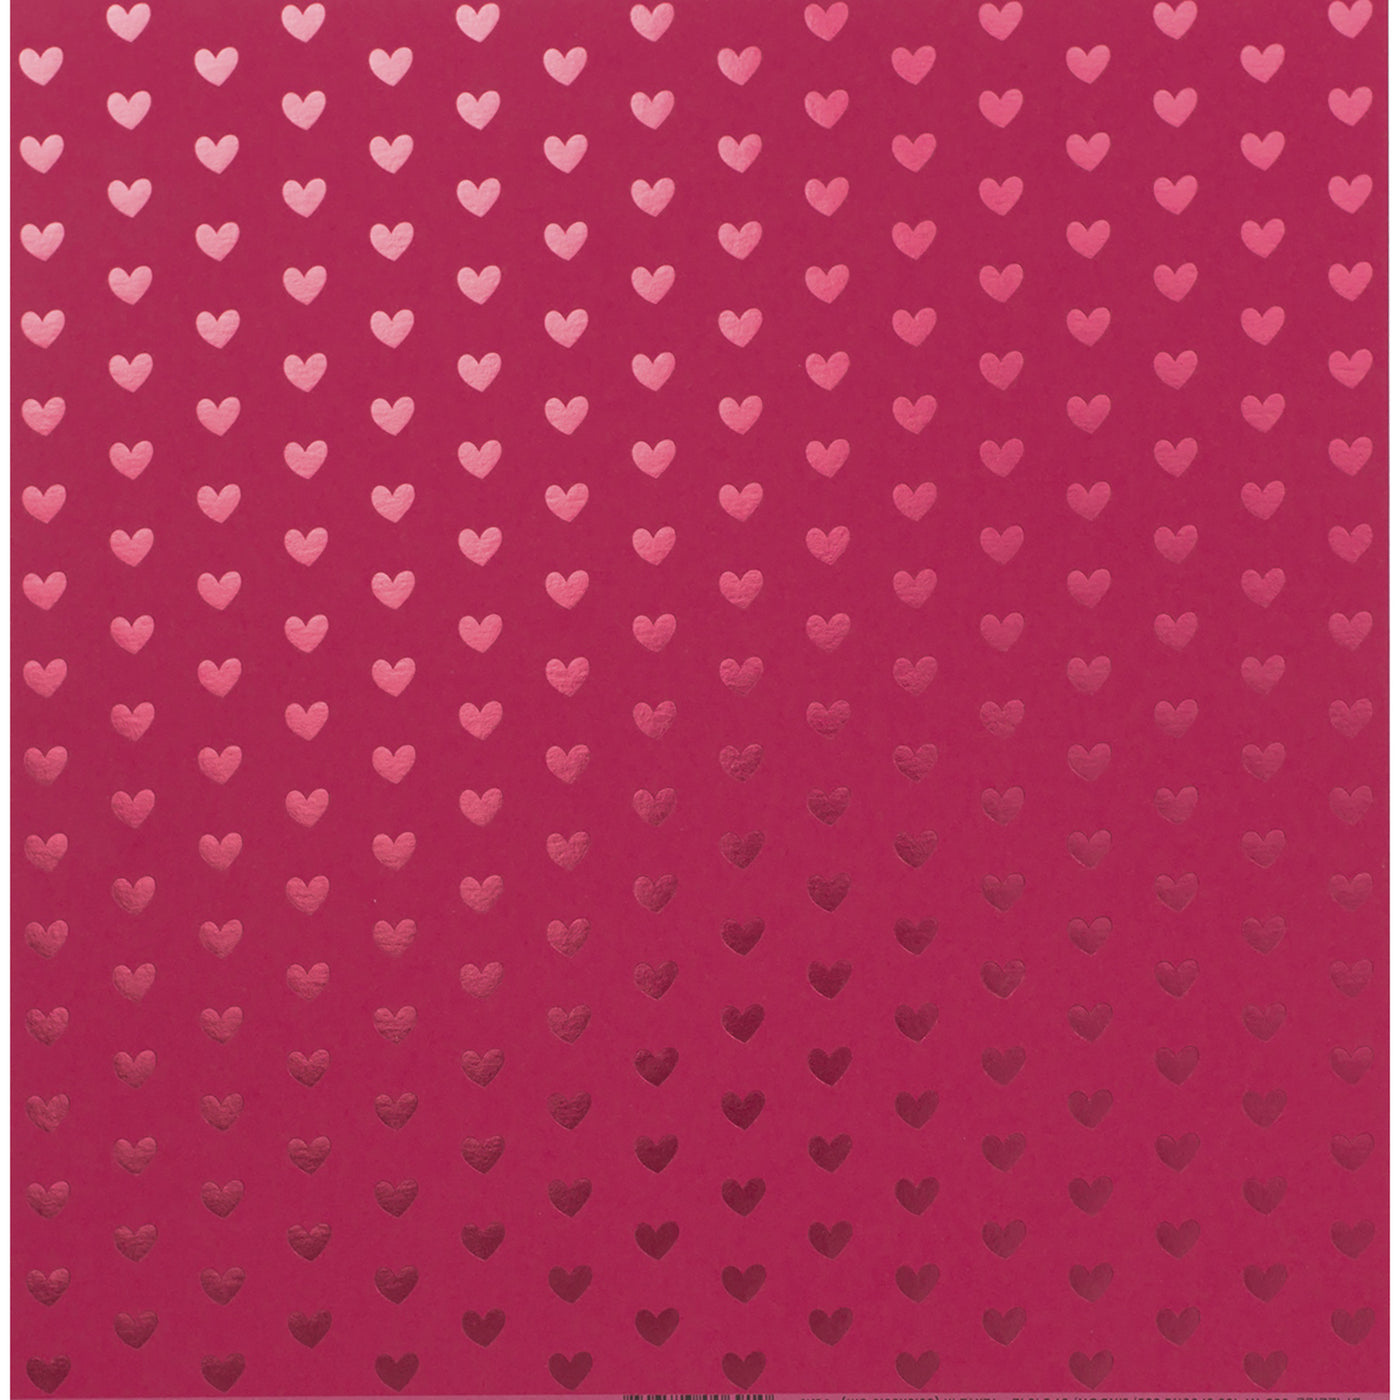 Taffy Foil Hearts - 12x12 Specialty cardstock. Rows of pink foil hearts on taffy pink cardstock.